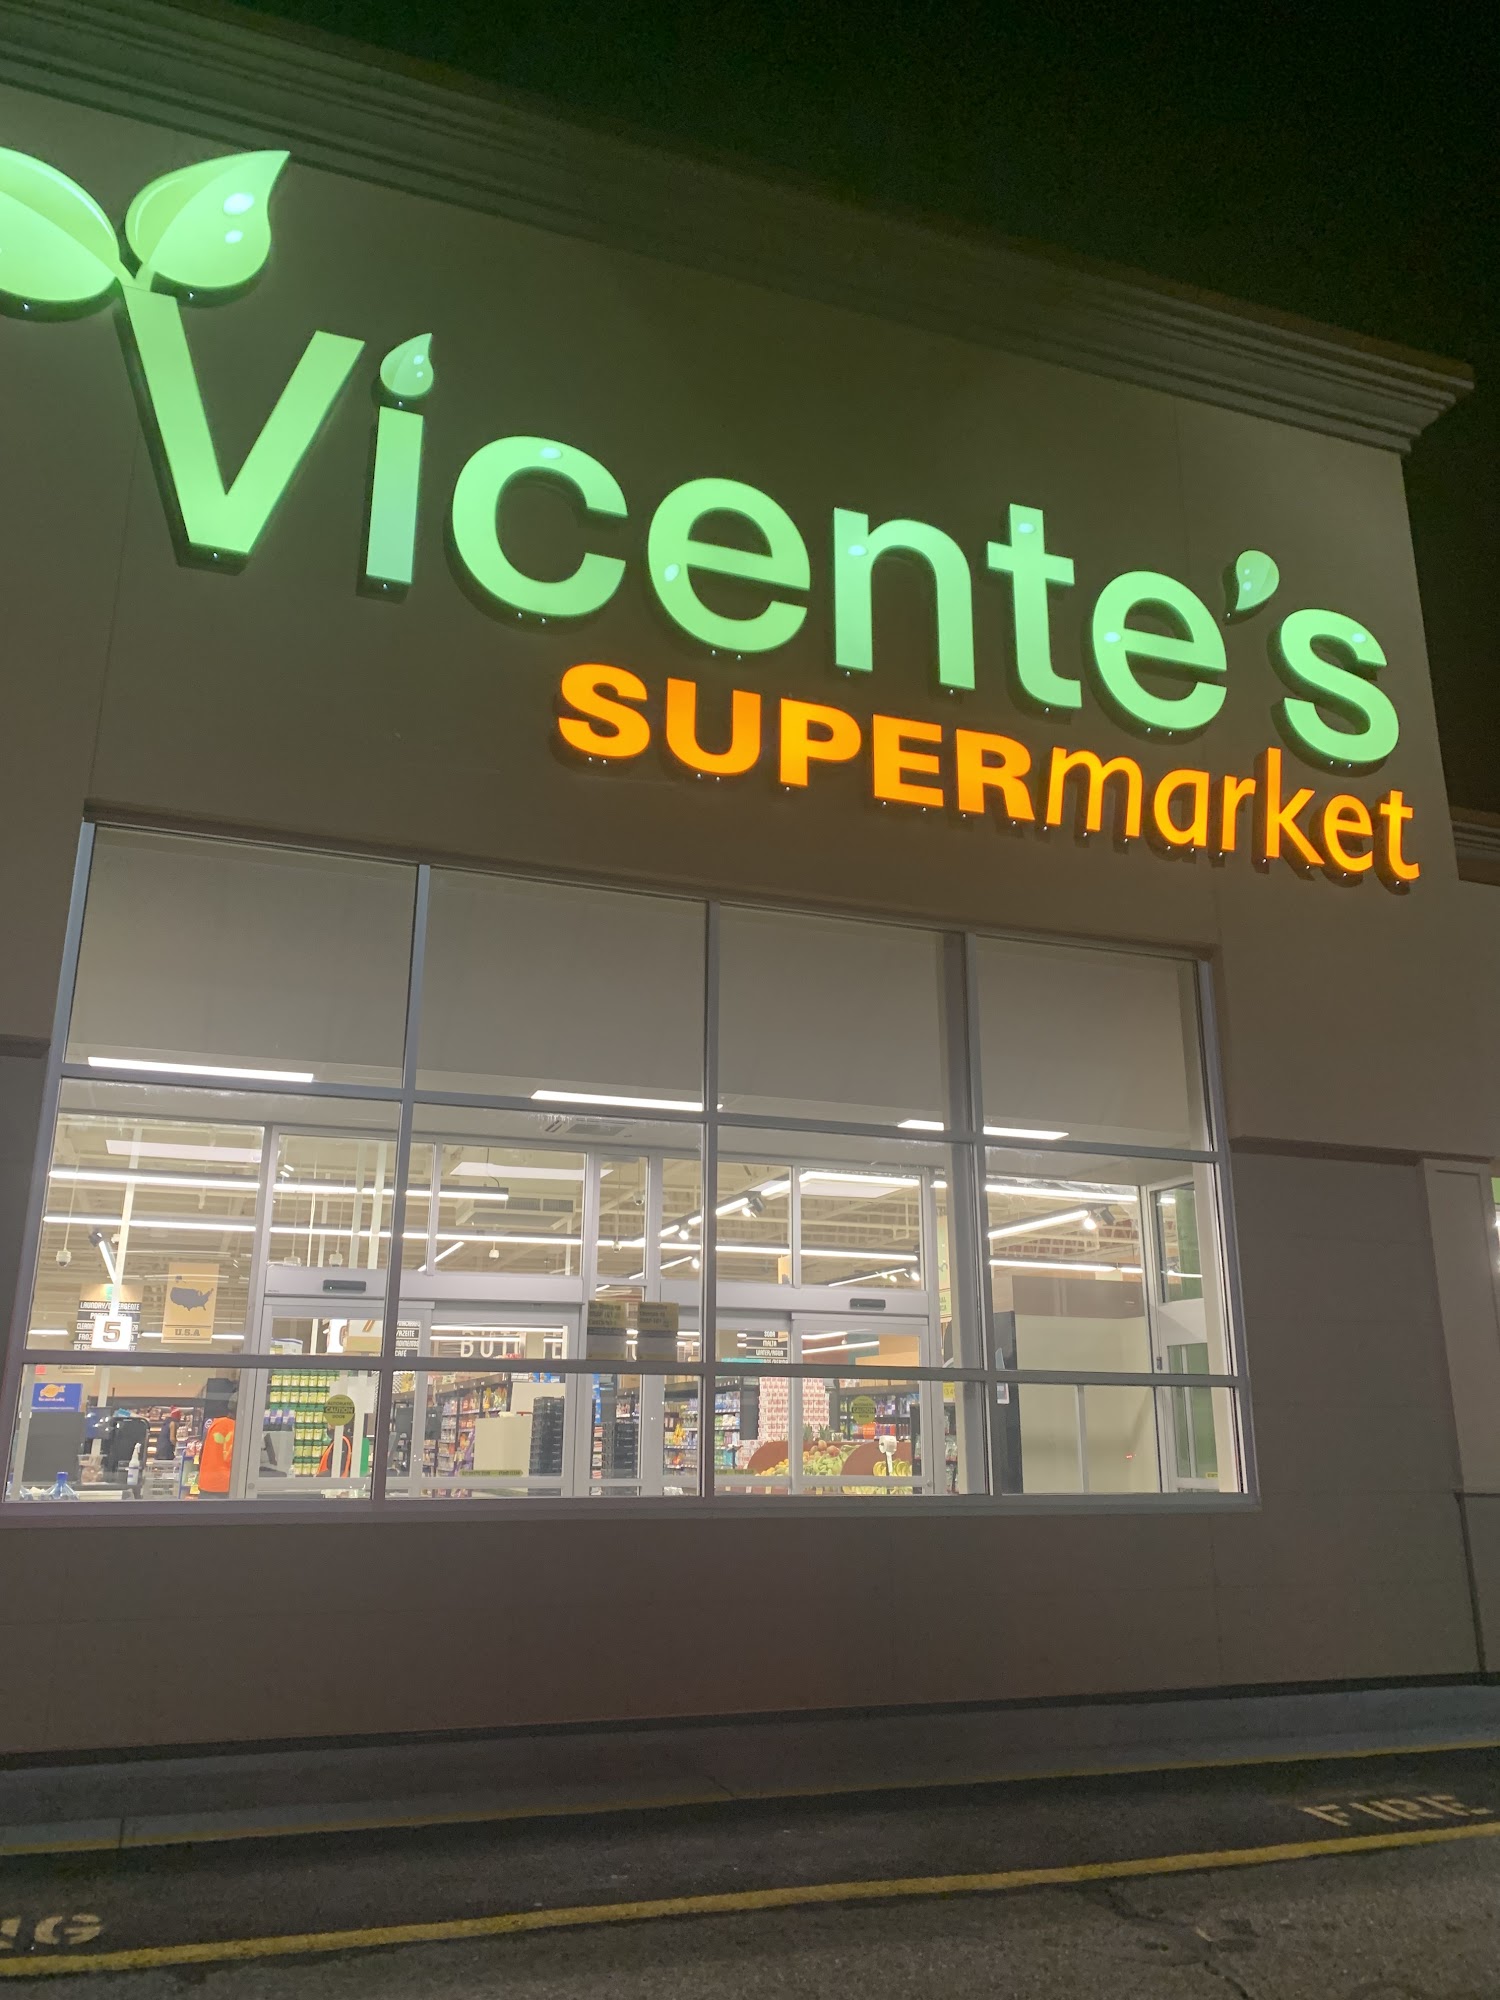 Vicente's Supermarket